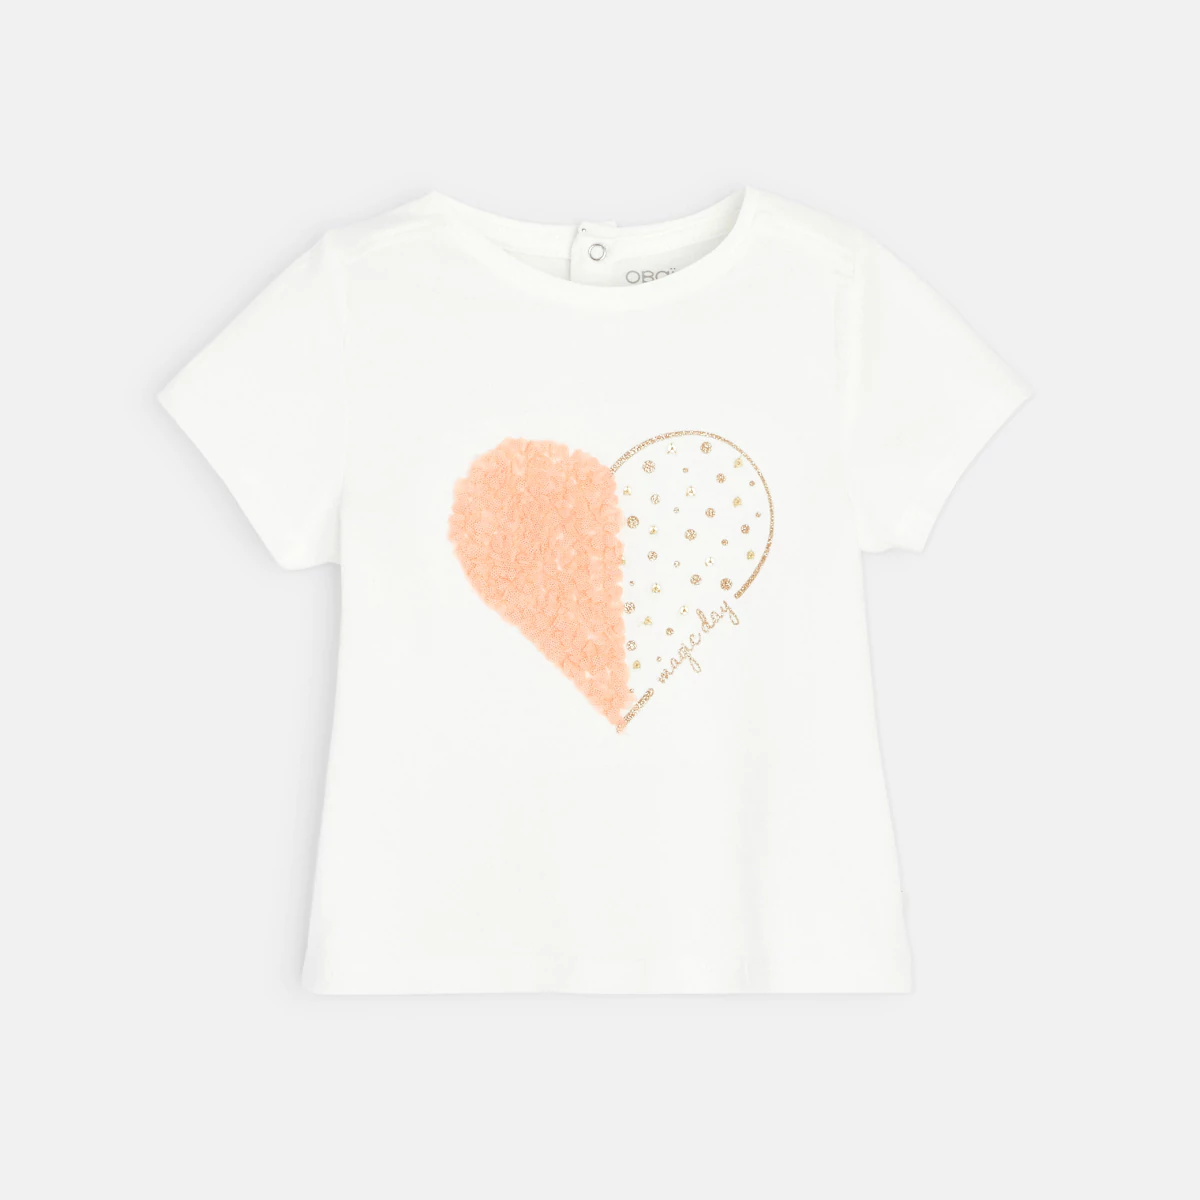 T-shirt motif cœur fantaisie